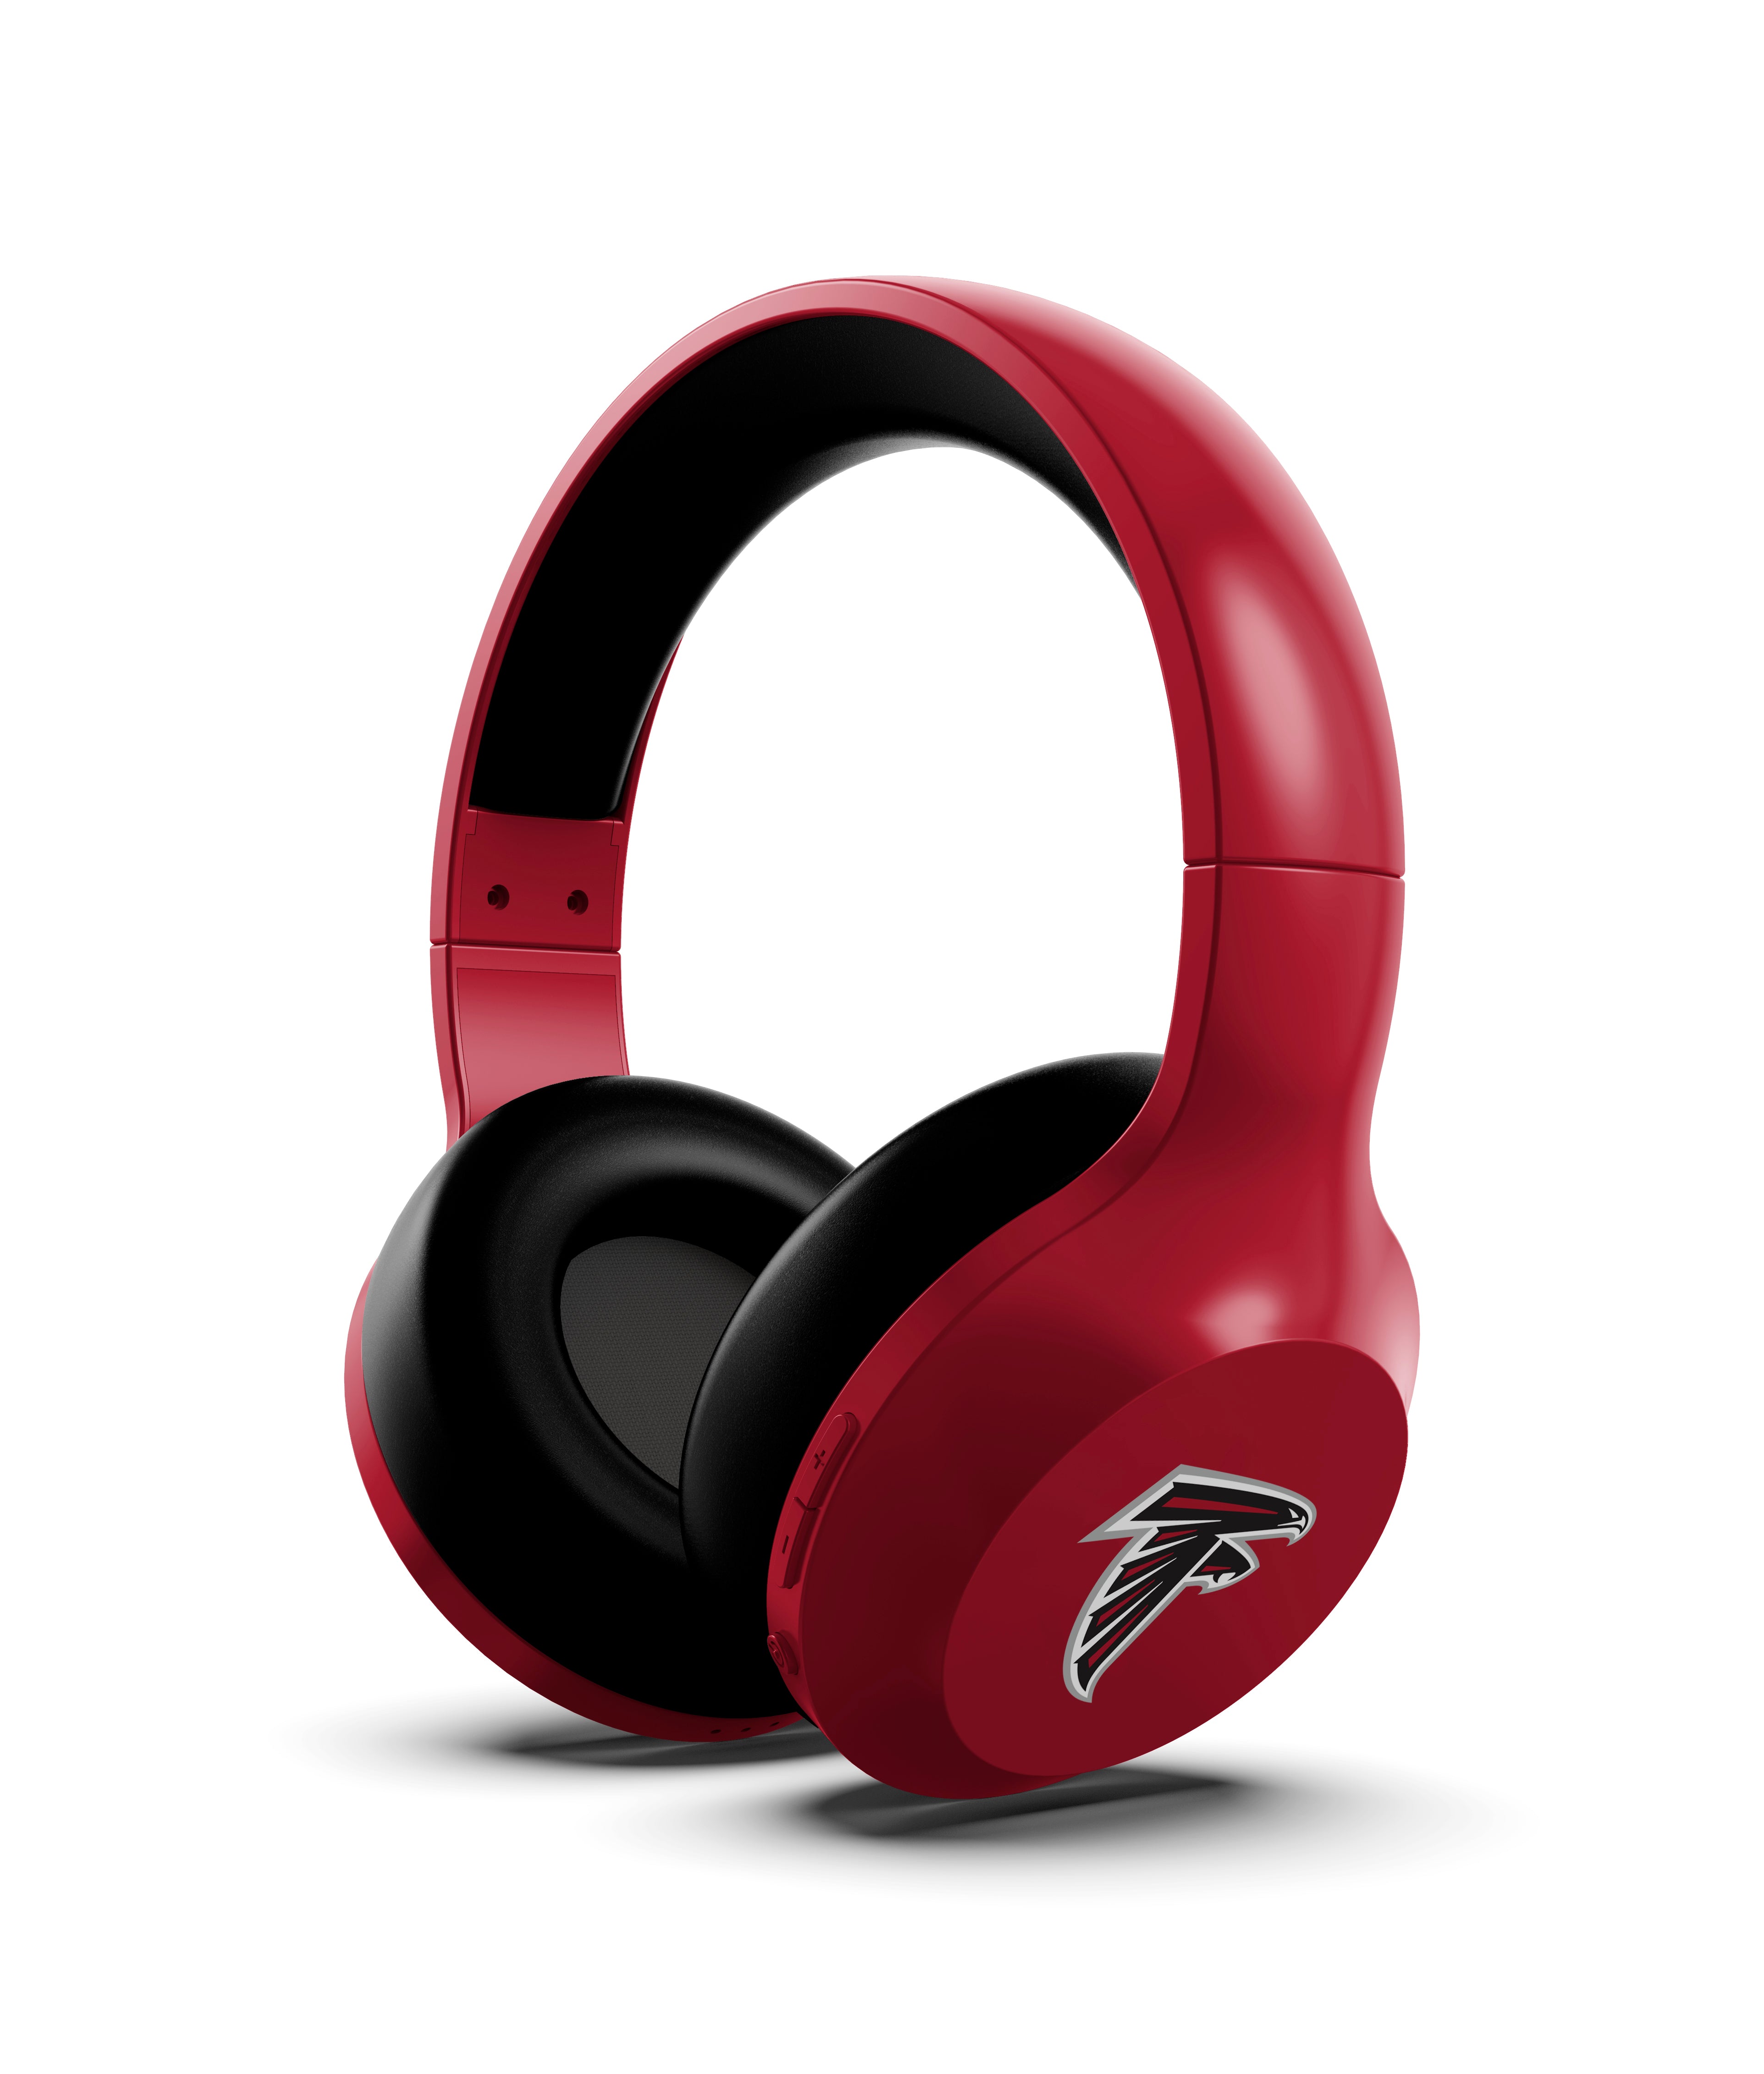 NFL Wireless Bluetooth DJ Headphones